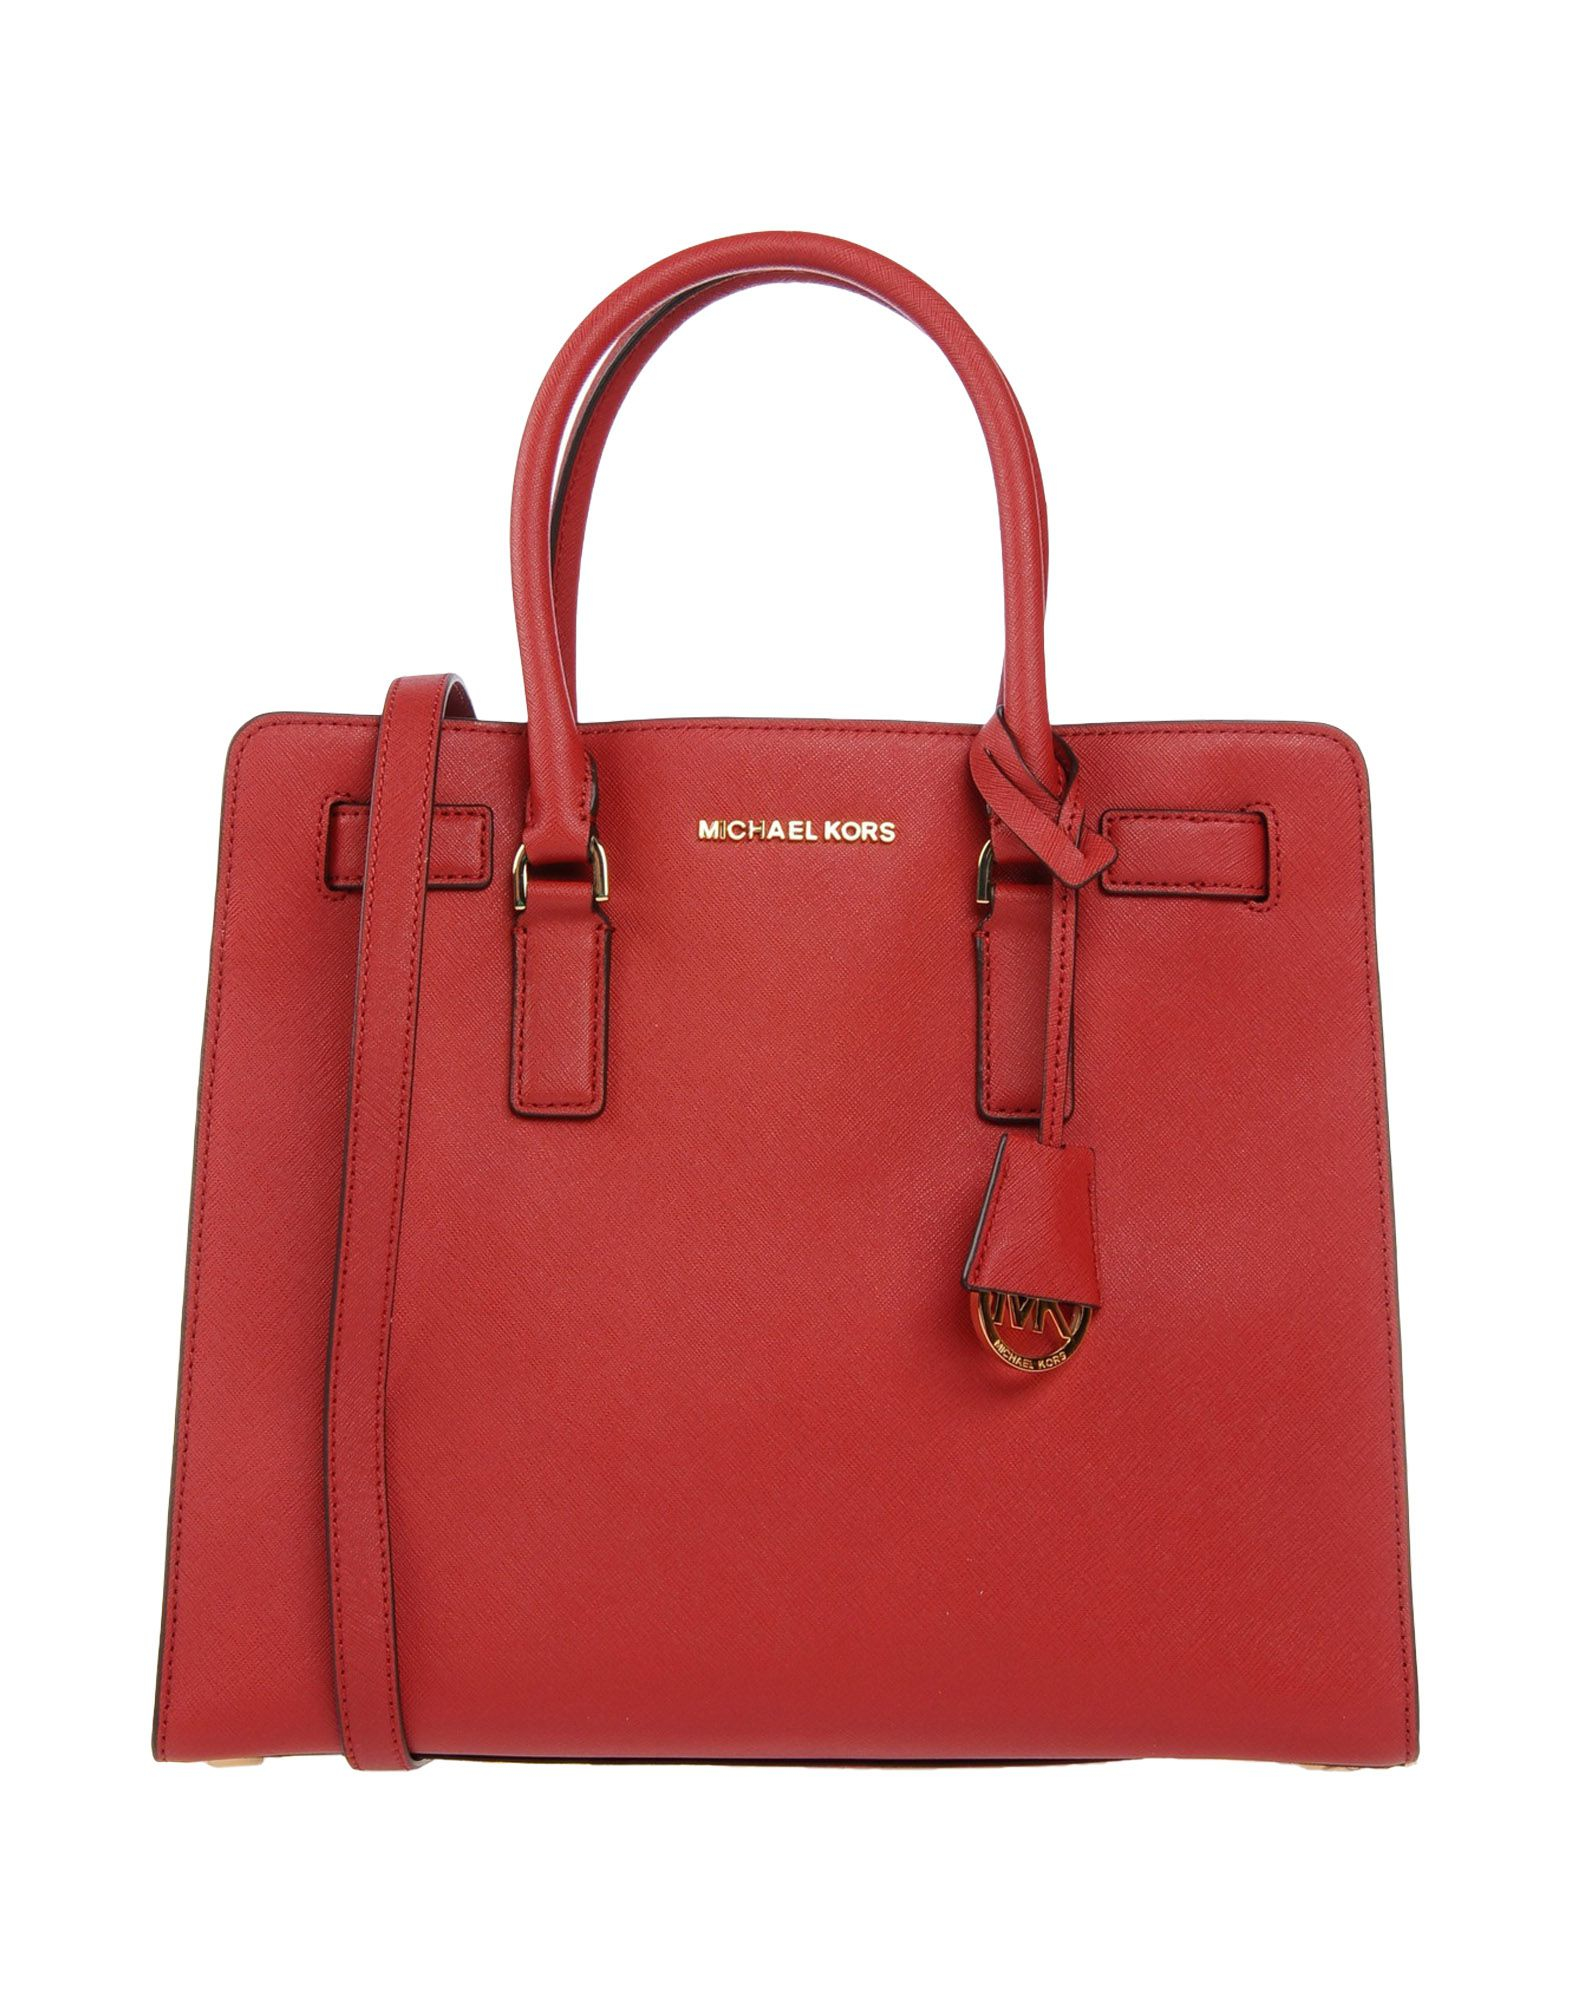 Lyst - Michael Michael Kors Handbag in Red